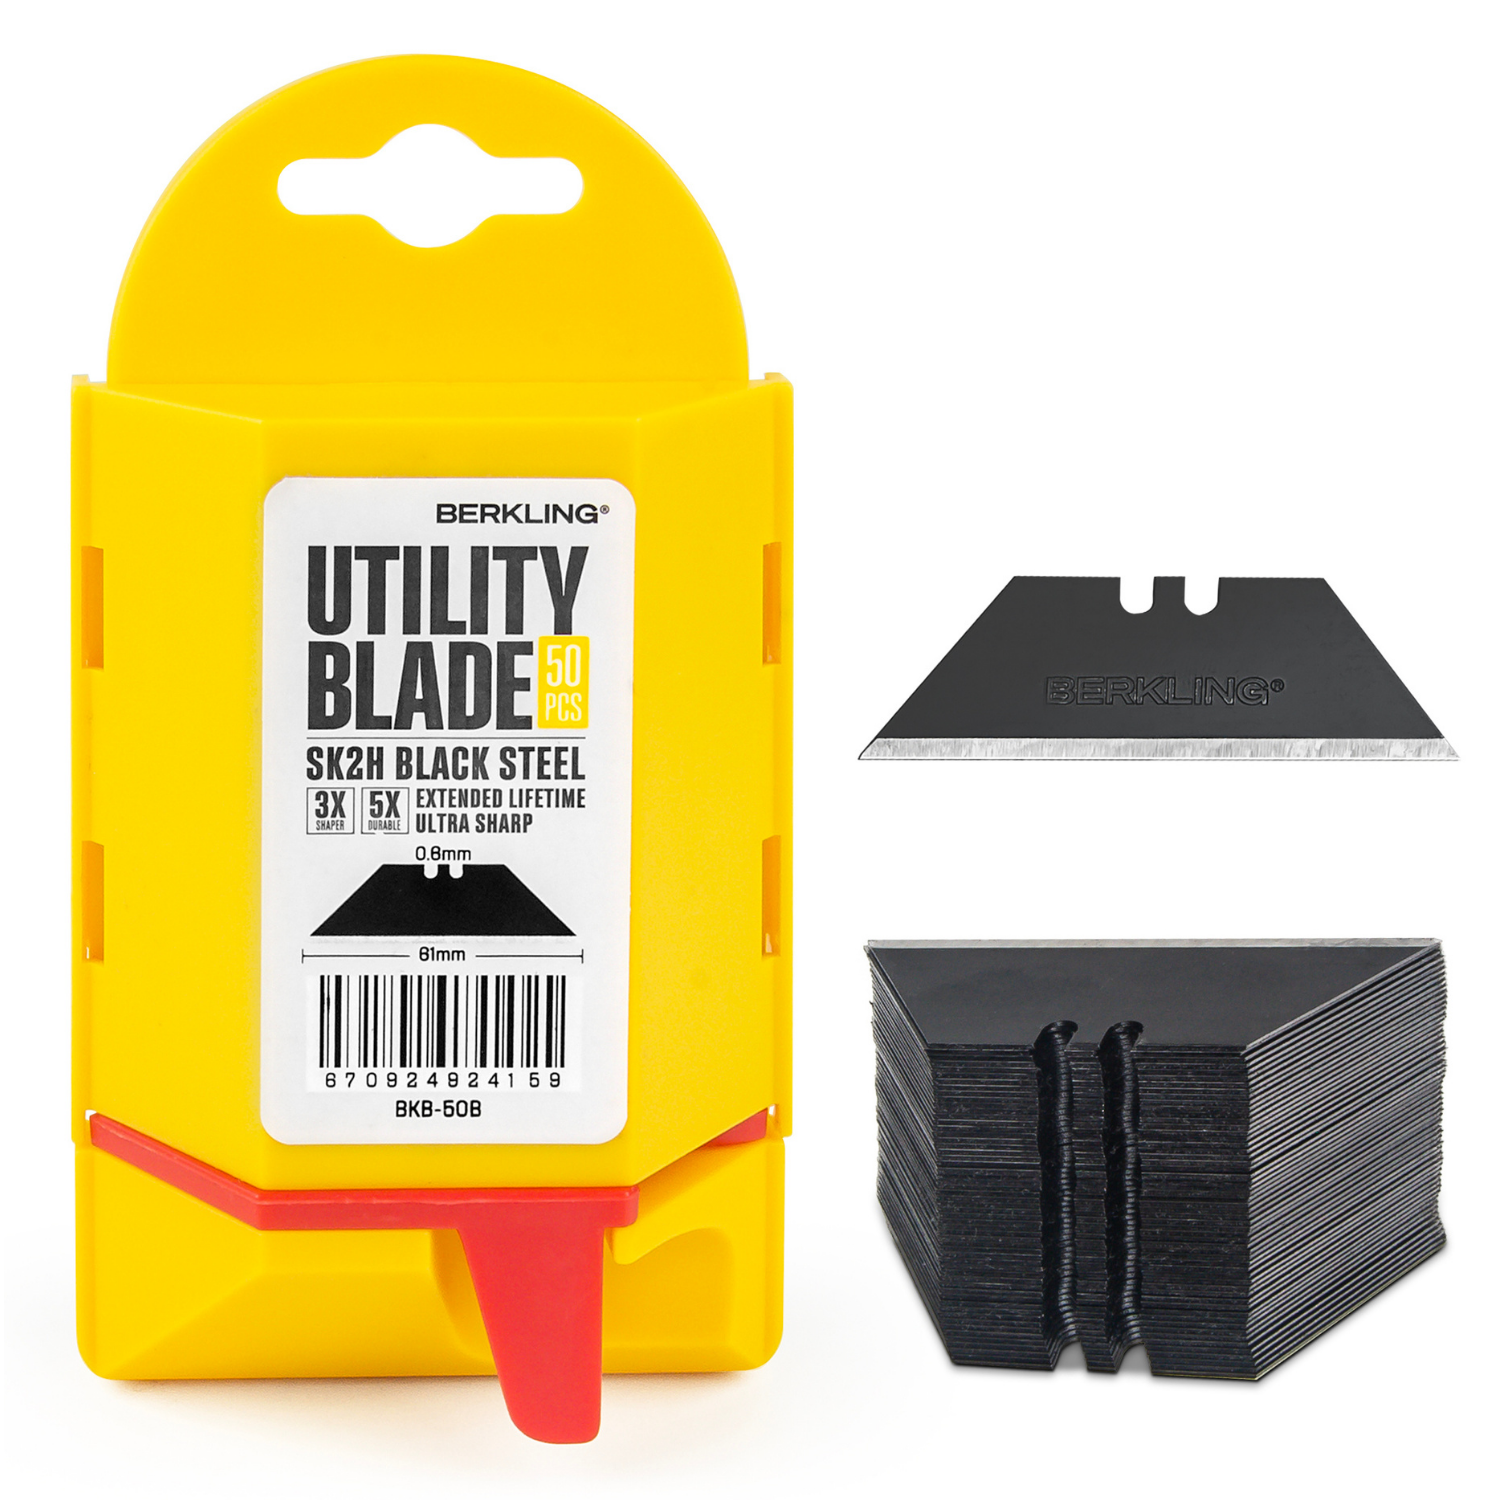 Blackspur 10pc Utility Knife Blades